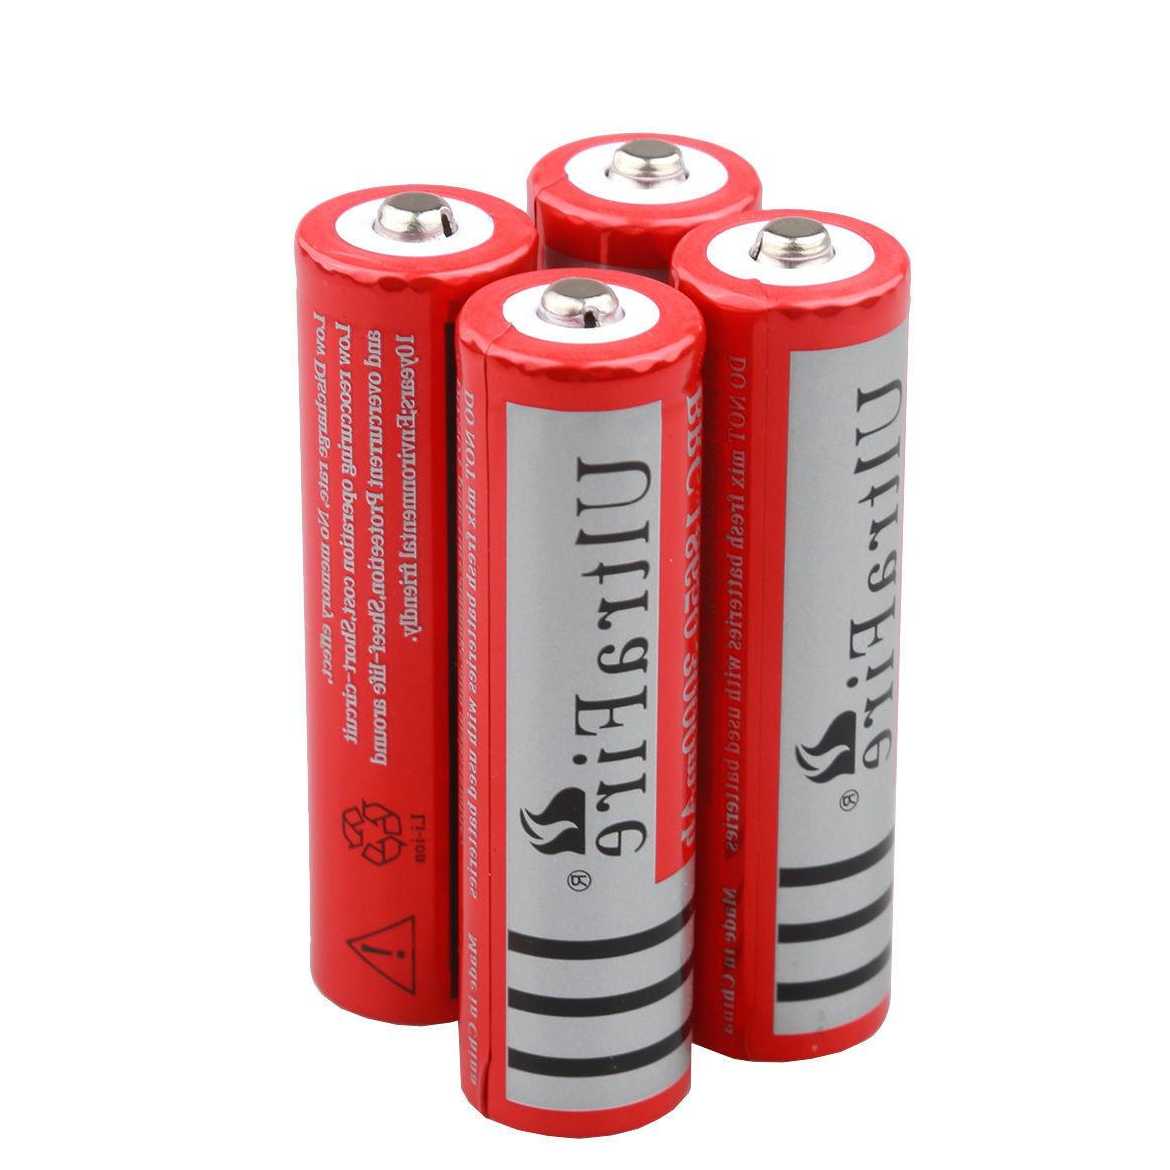 Tanio 18650 4800mAh 3.7v Li-ion Rechargeable Battery for LED Flash…